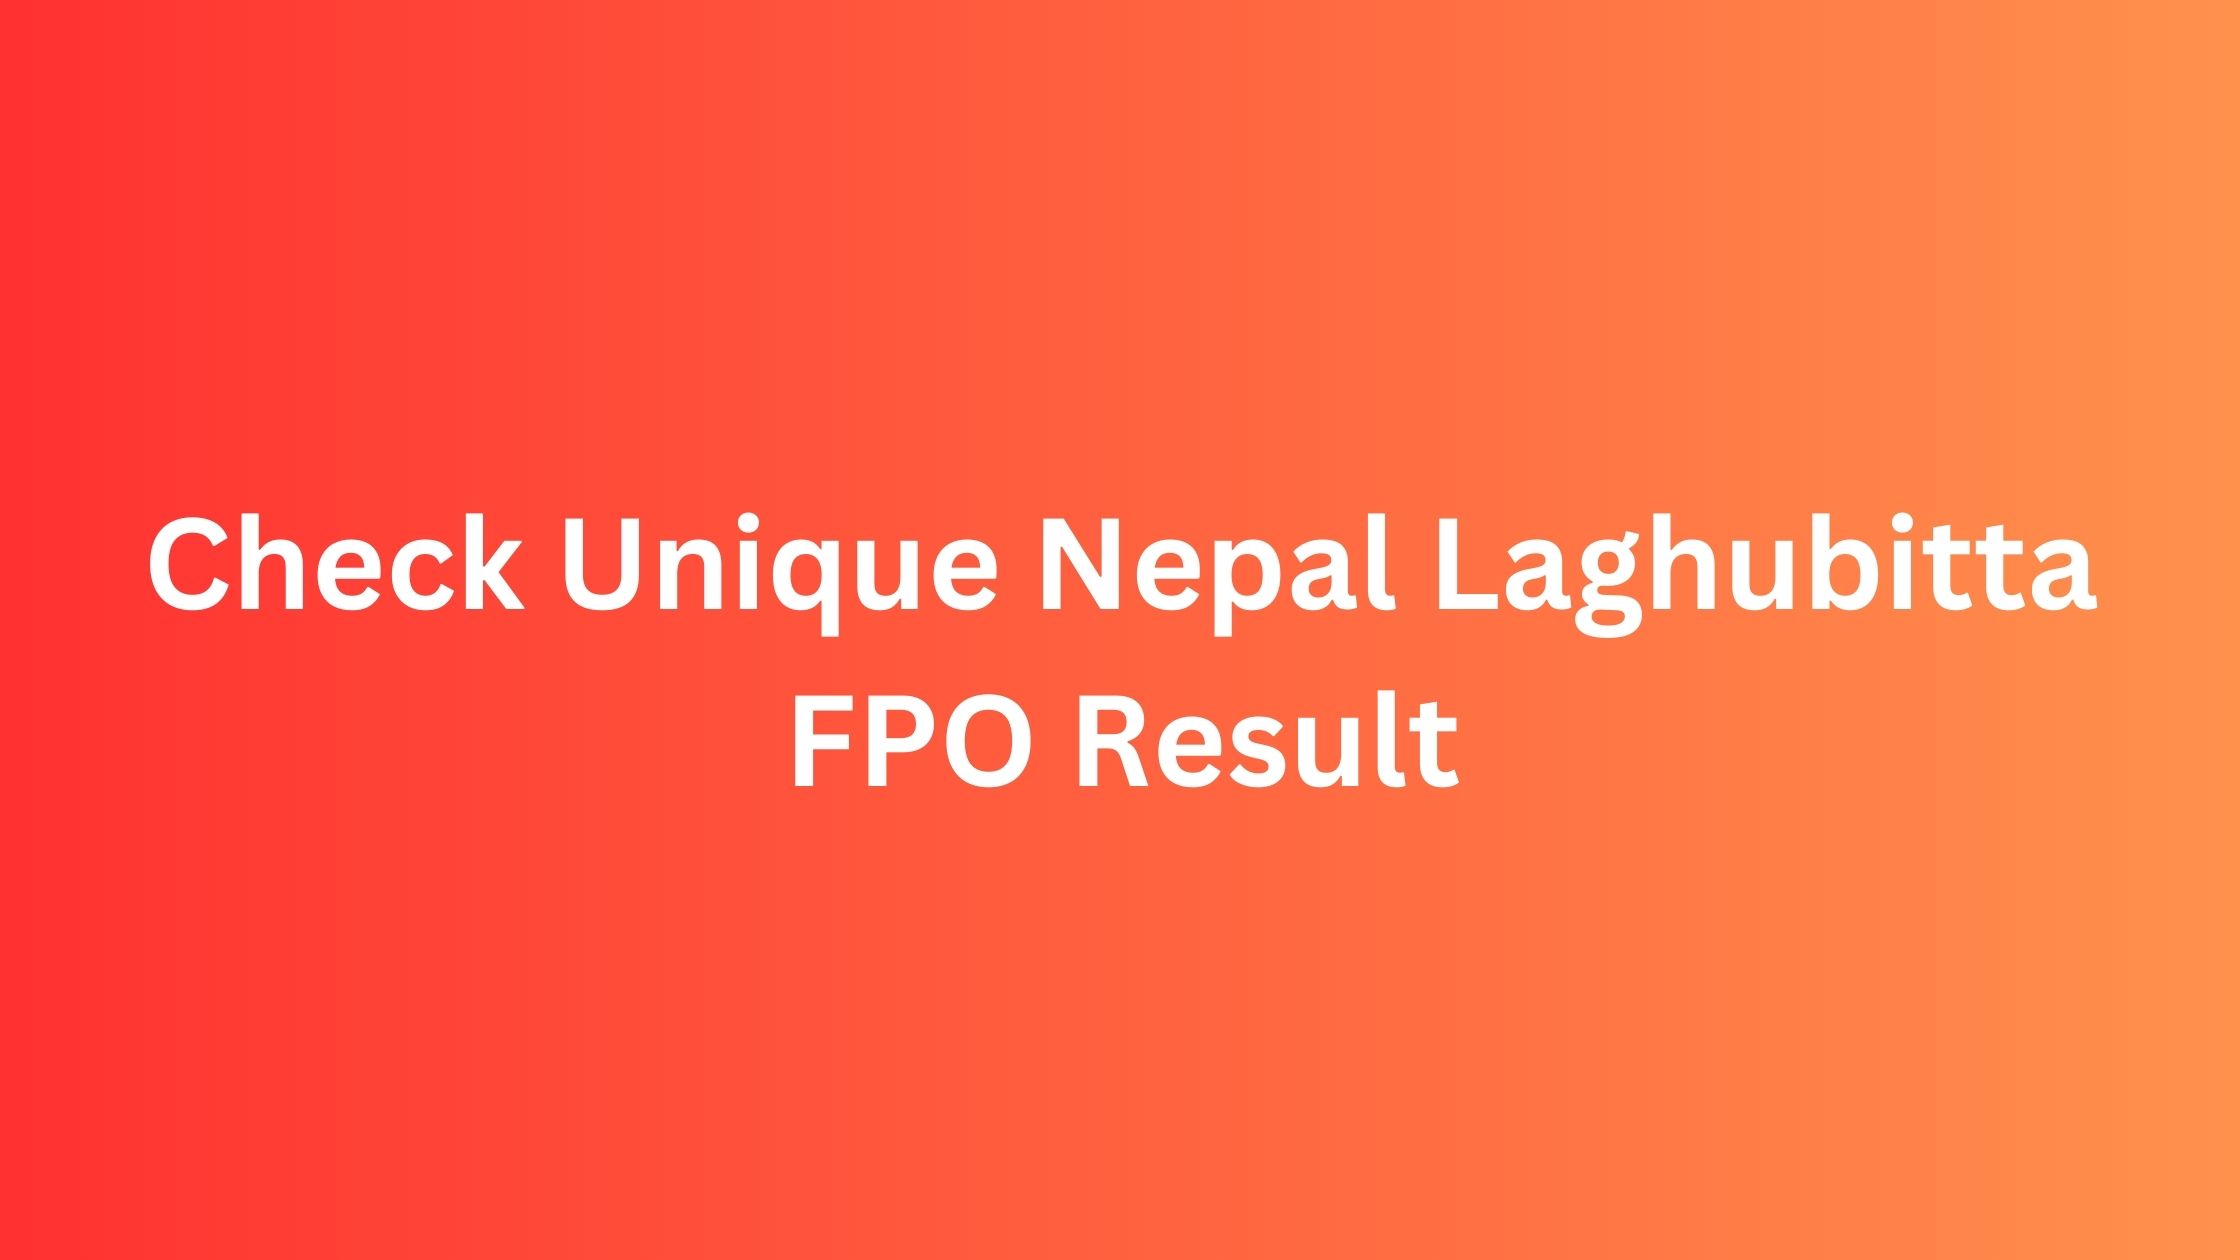 Check Unique Nepal Laghubitta FPO Result (Meroshare, CDSC, Muktinath Capital Limited)